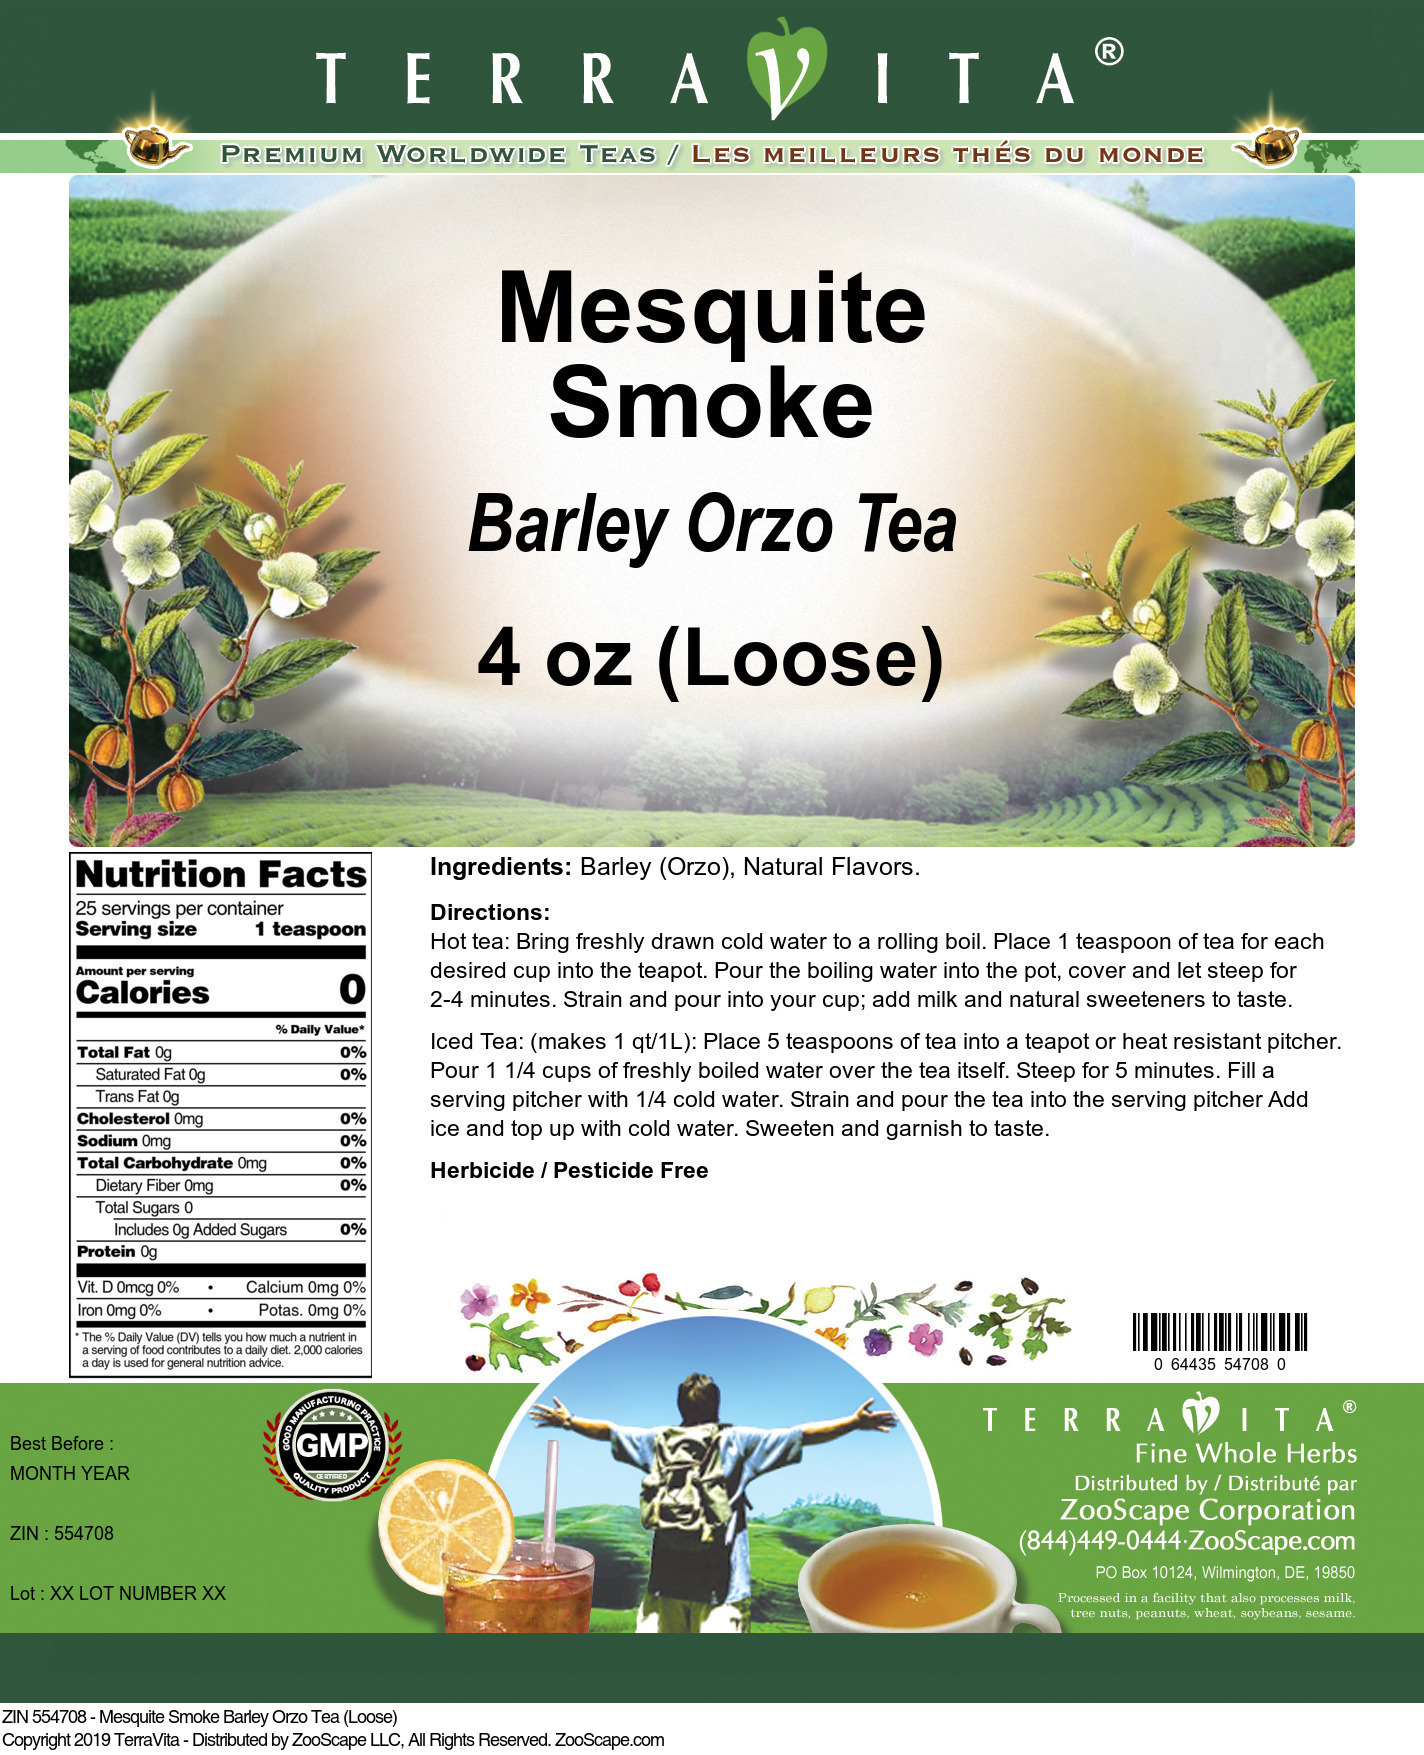 Mesquite Smoke Barley Orzo Tea (Loose) - Label